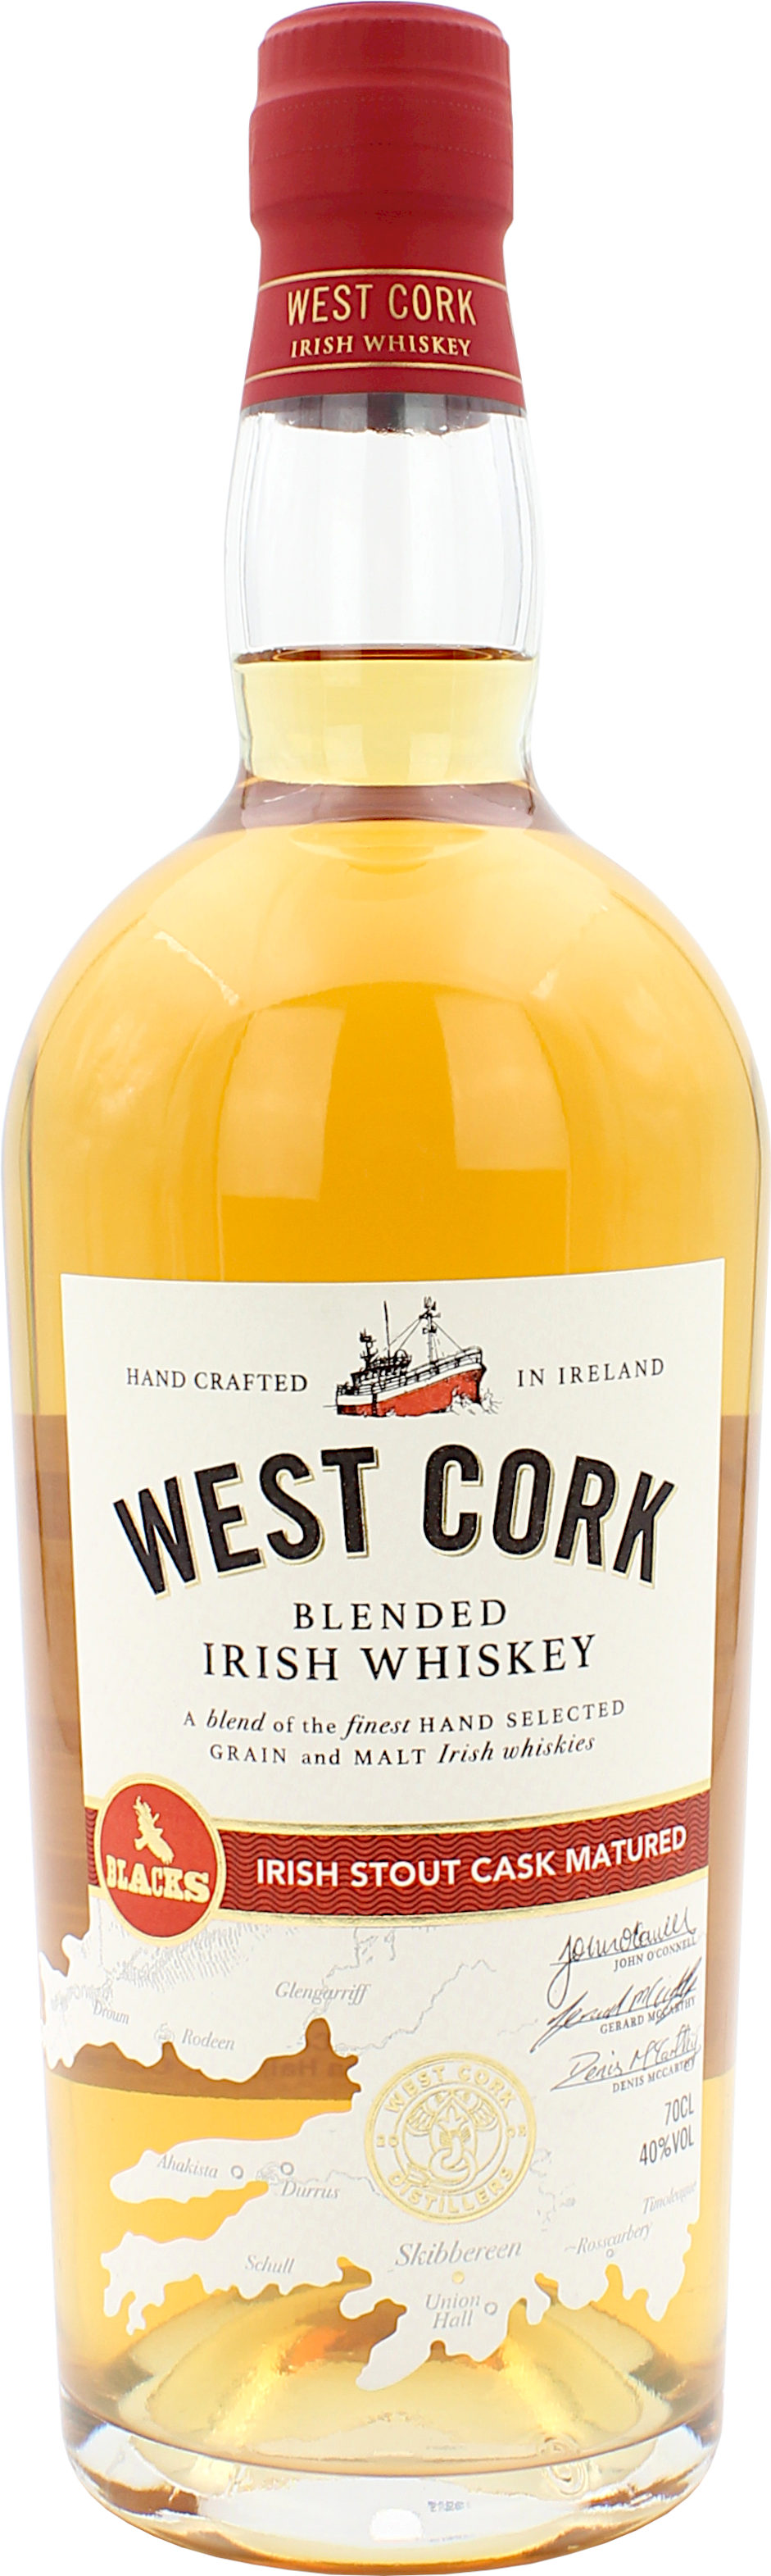 West Cork Irish Stout Cask Finish 40.0% 0,7l